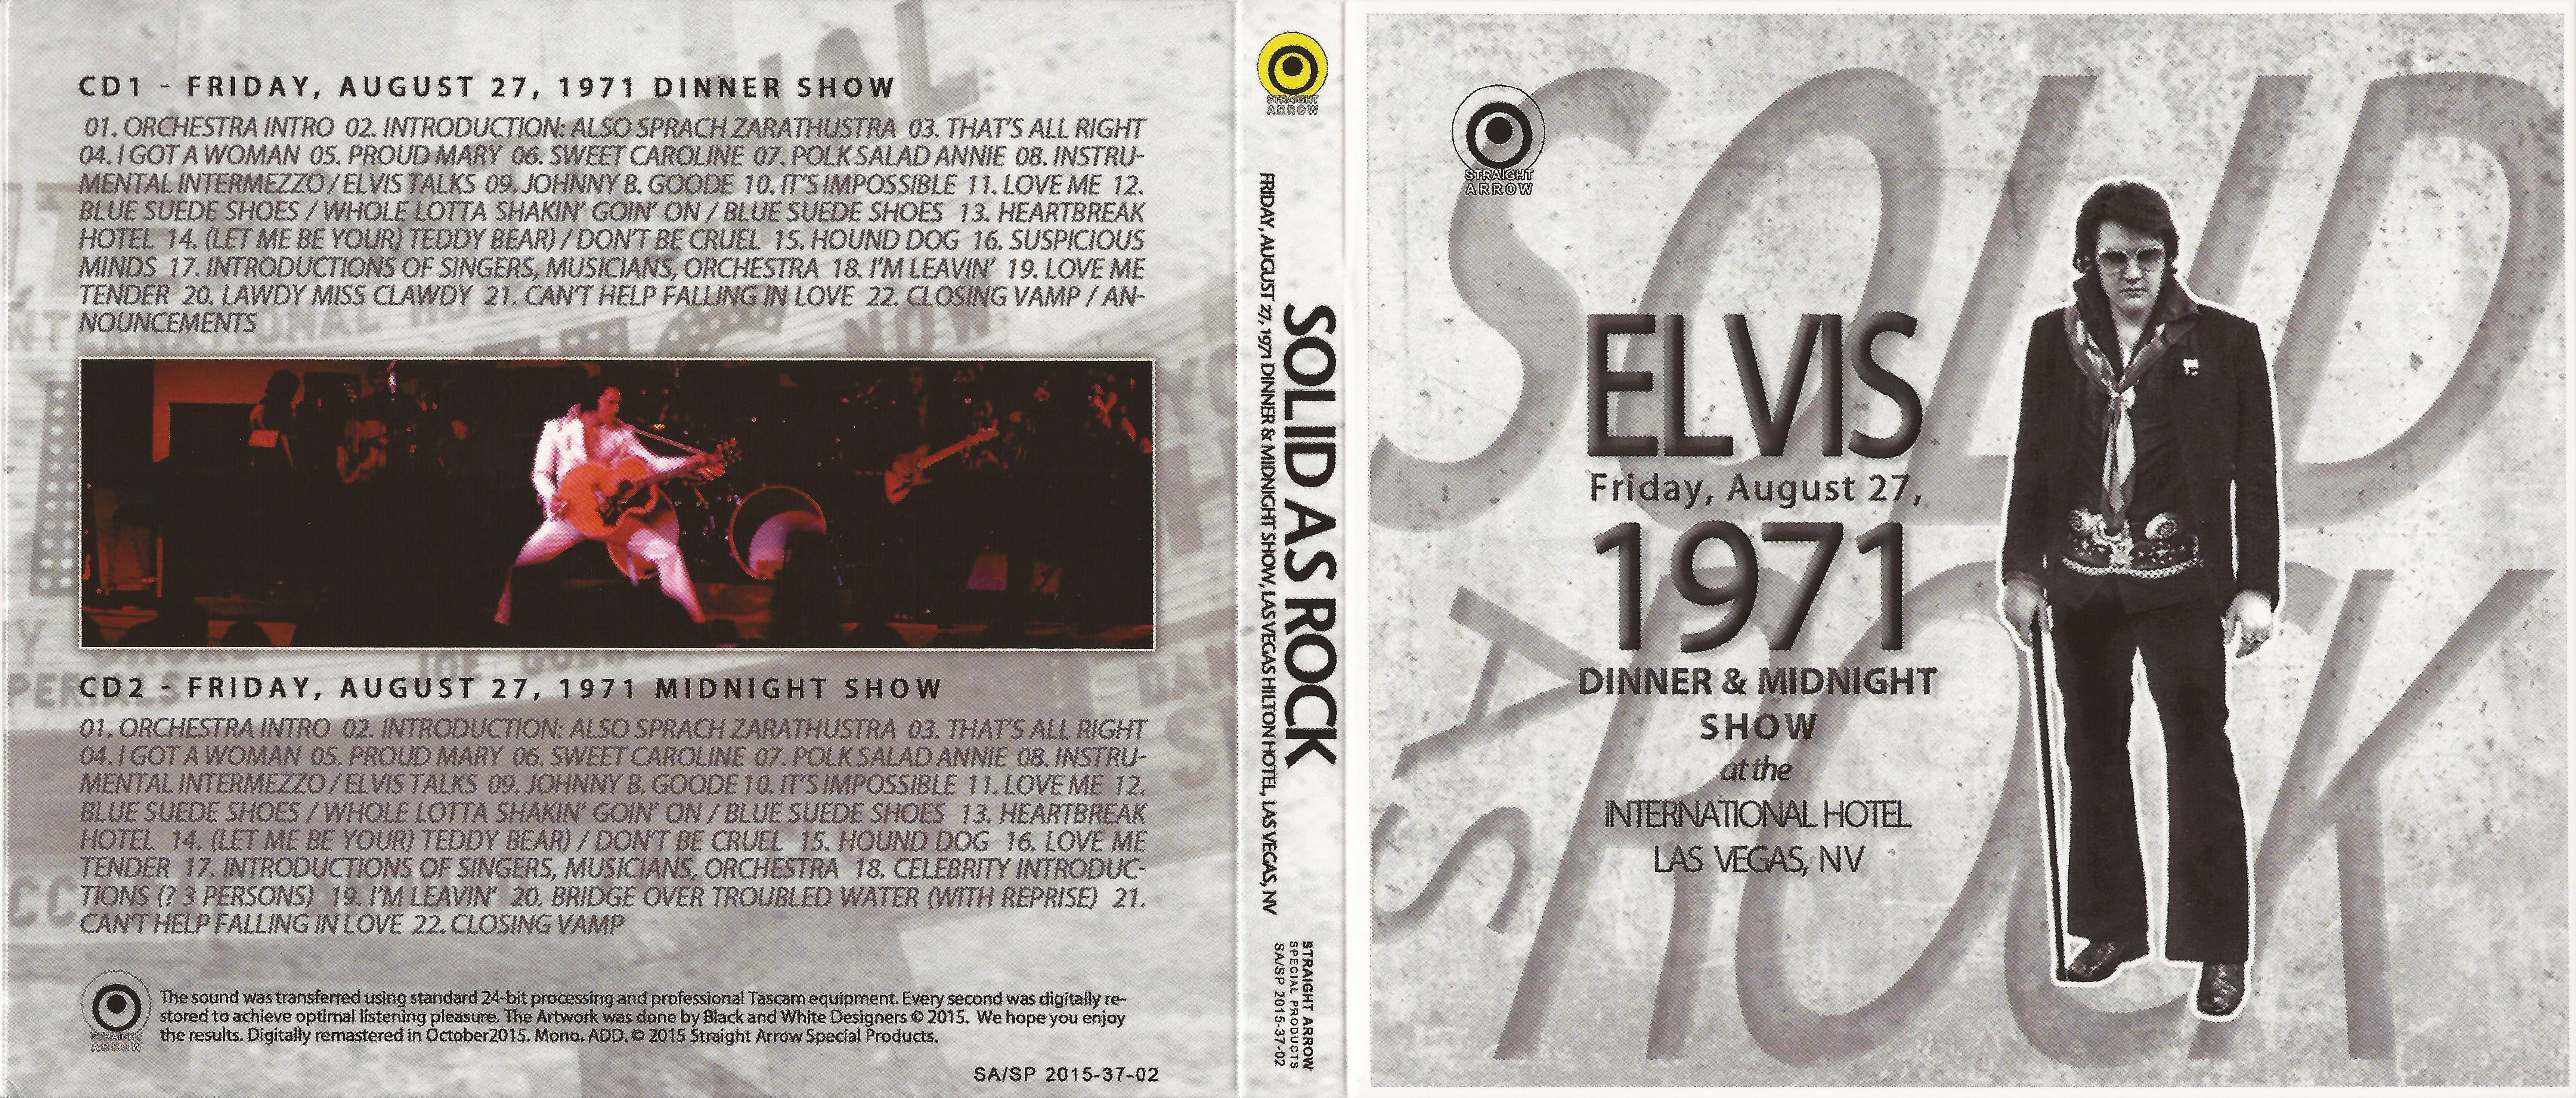 ElvisPresley1971-08-27MidnightInternationalHotelShowroomLasVegasNV (1).jpg